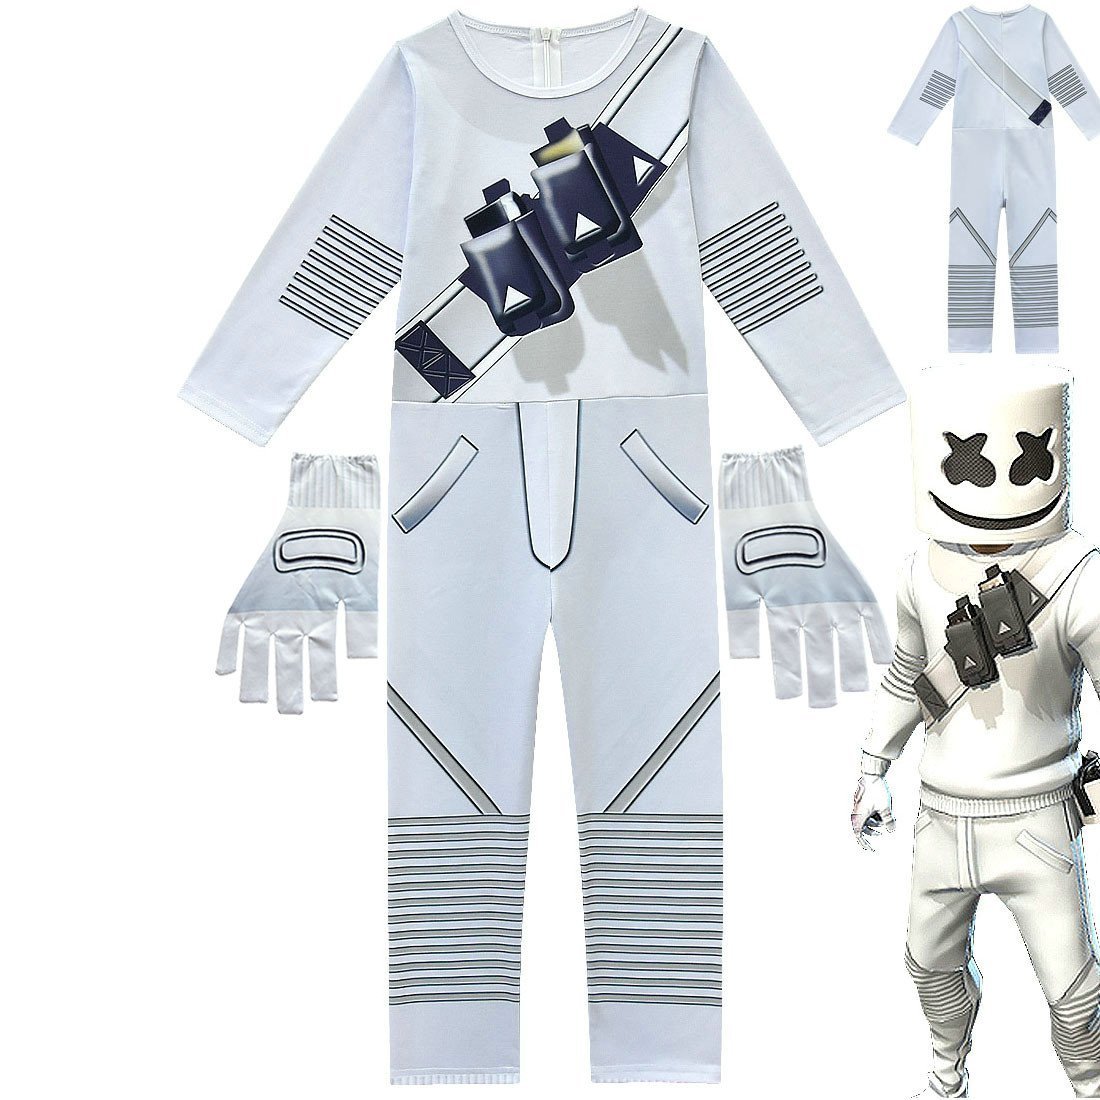 DJ Marshmello Chris Comstock Cosplay Costume Jumpsuit for Kids Gift